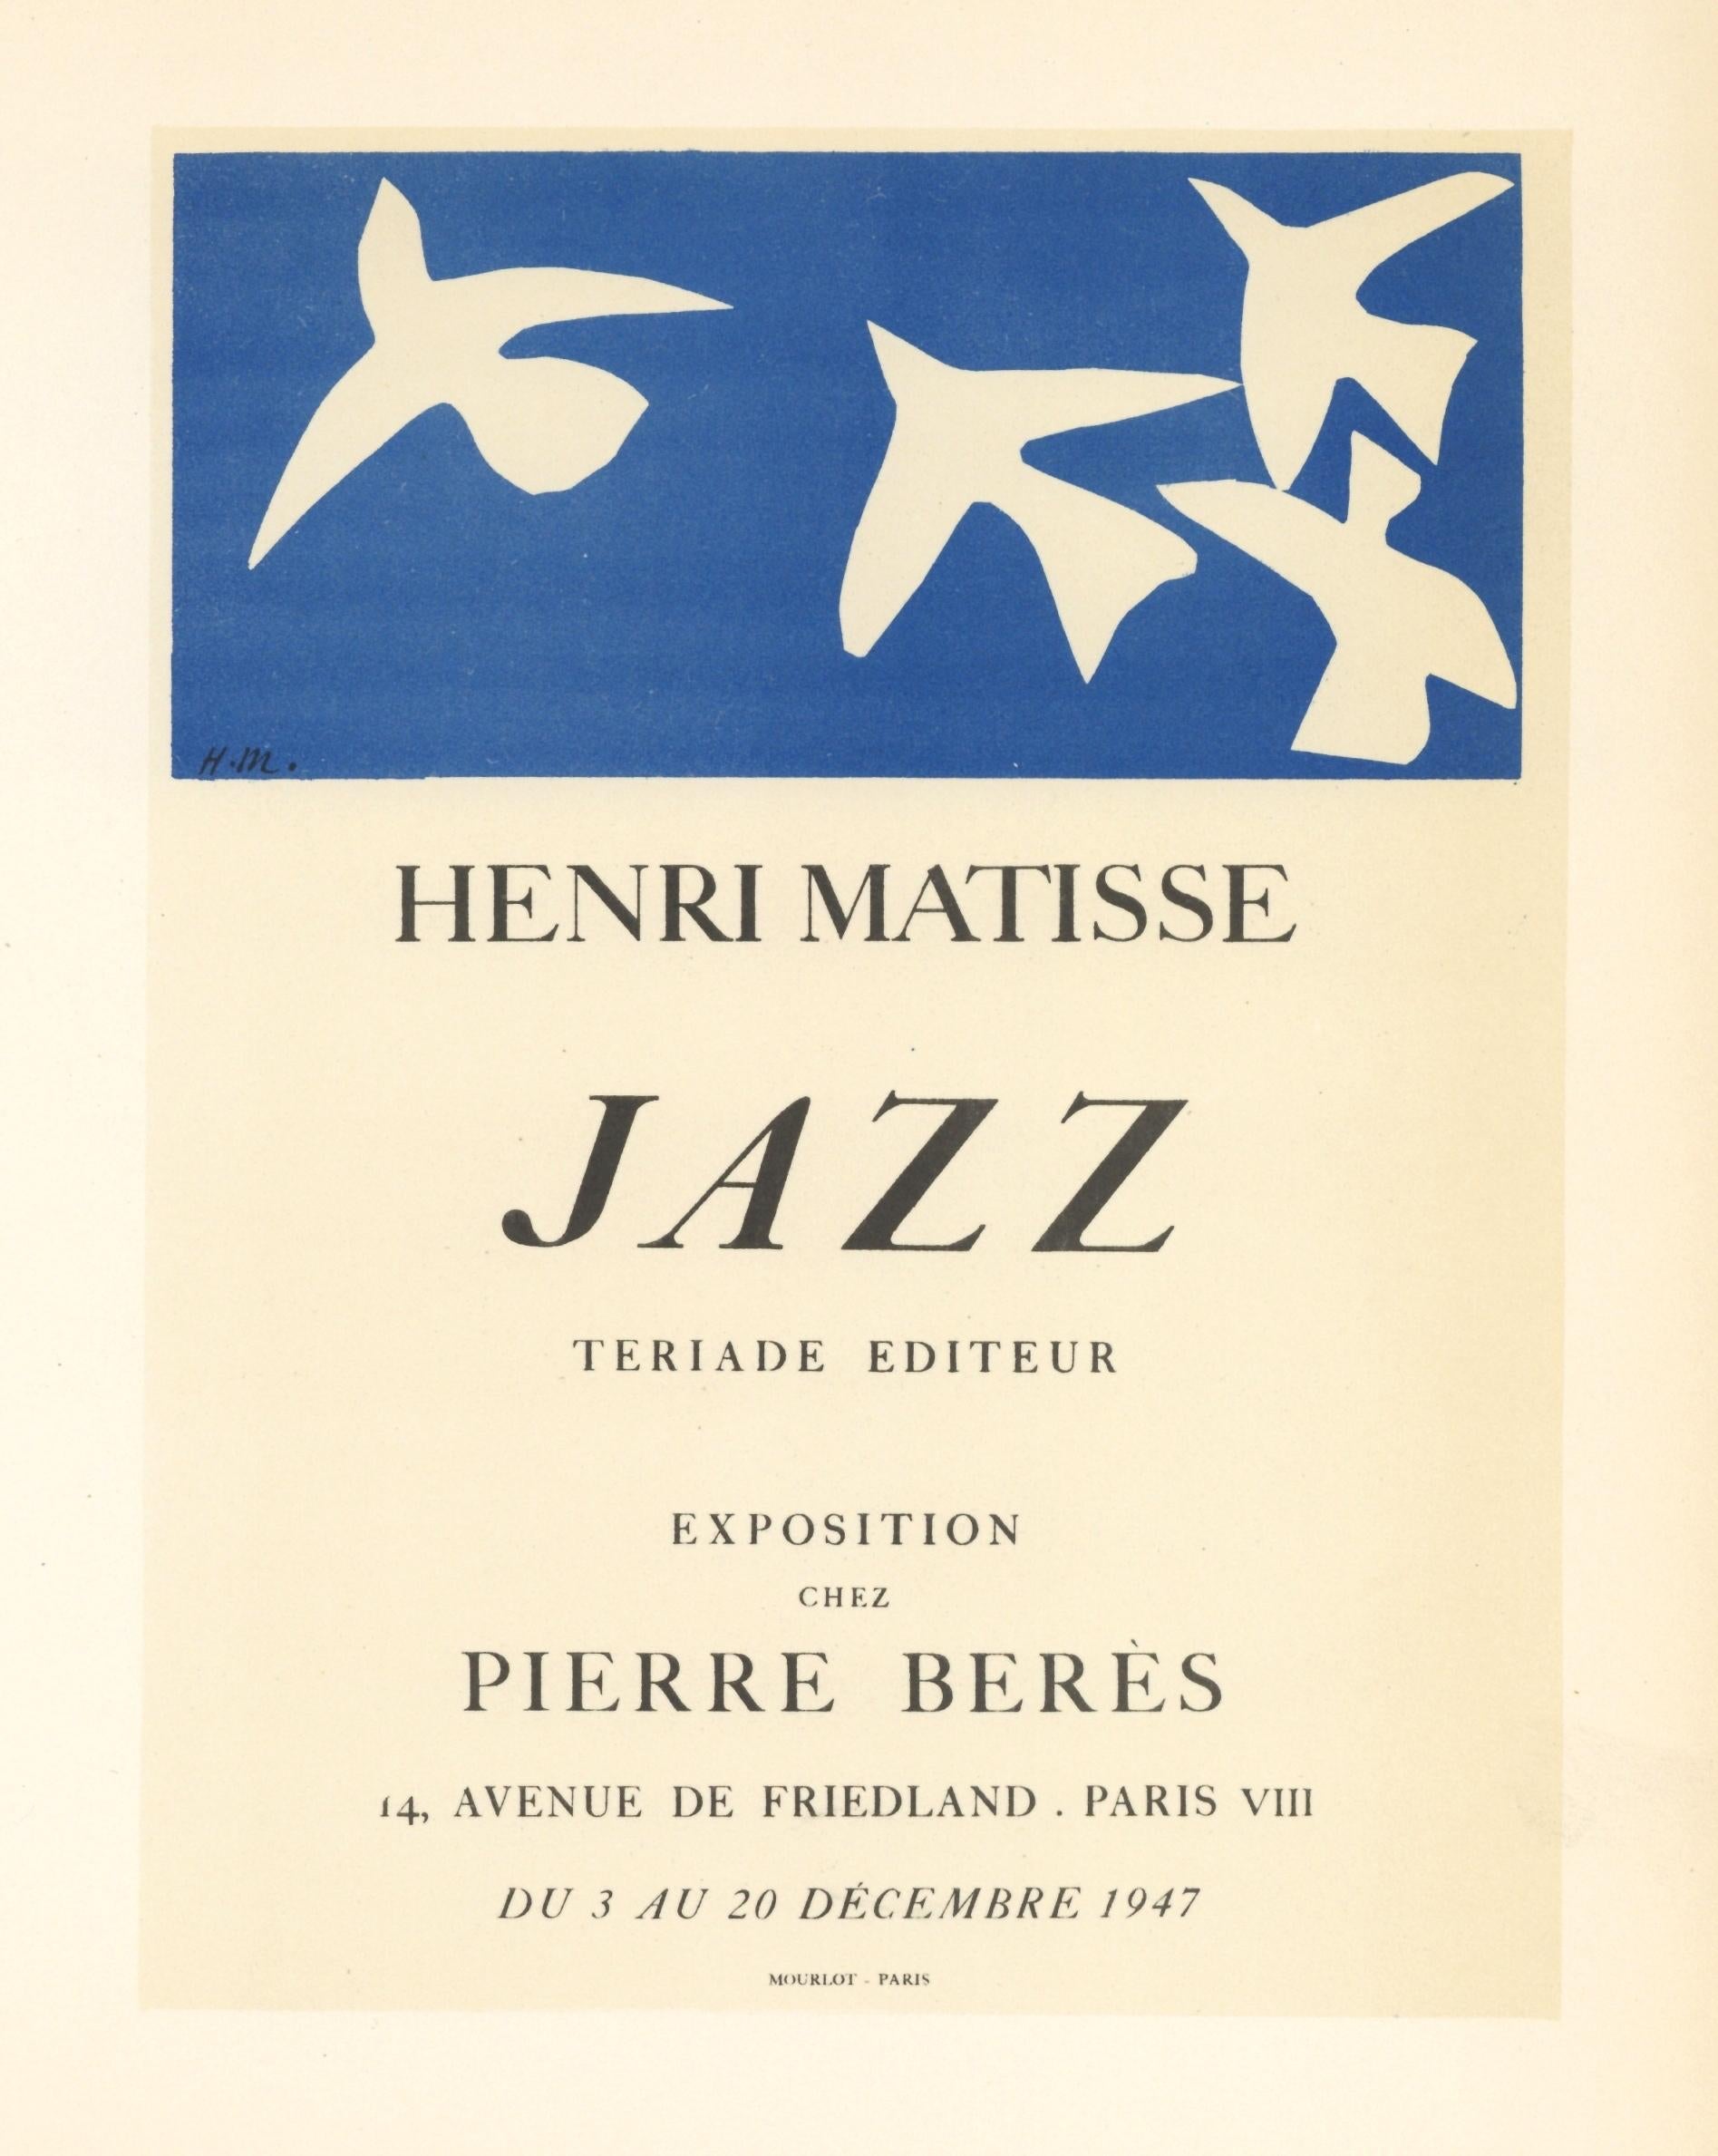 (after) Henri Matisse Portrait Print - "Jazz" lithograph poster